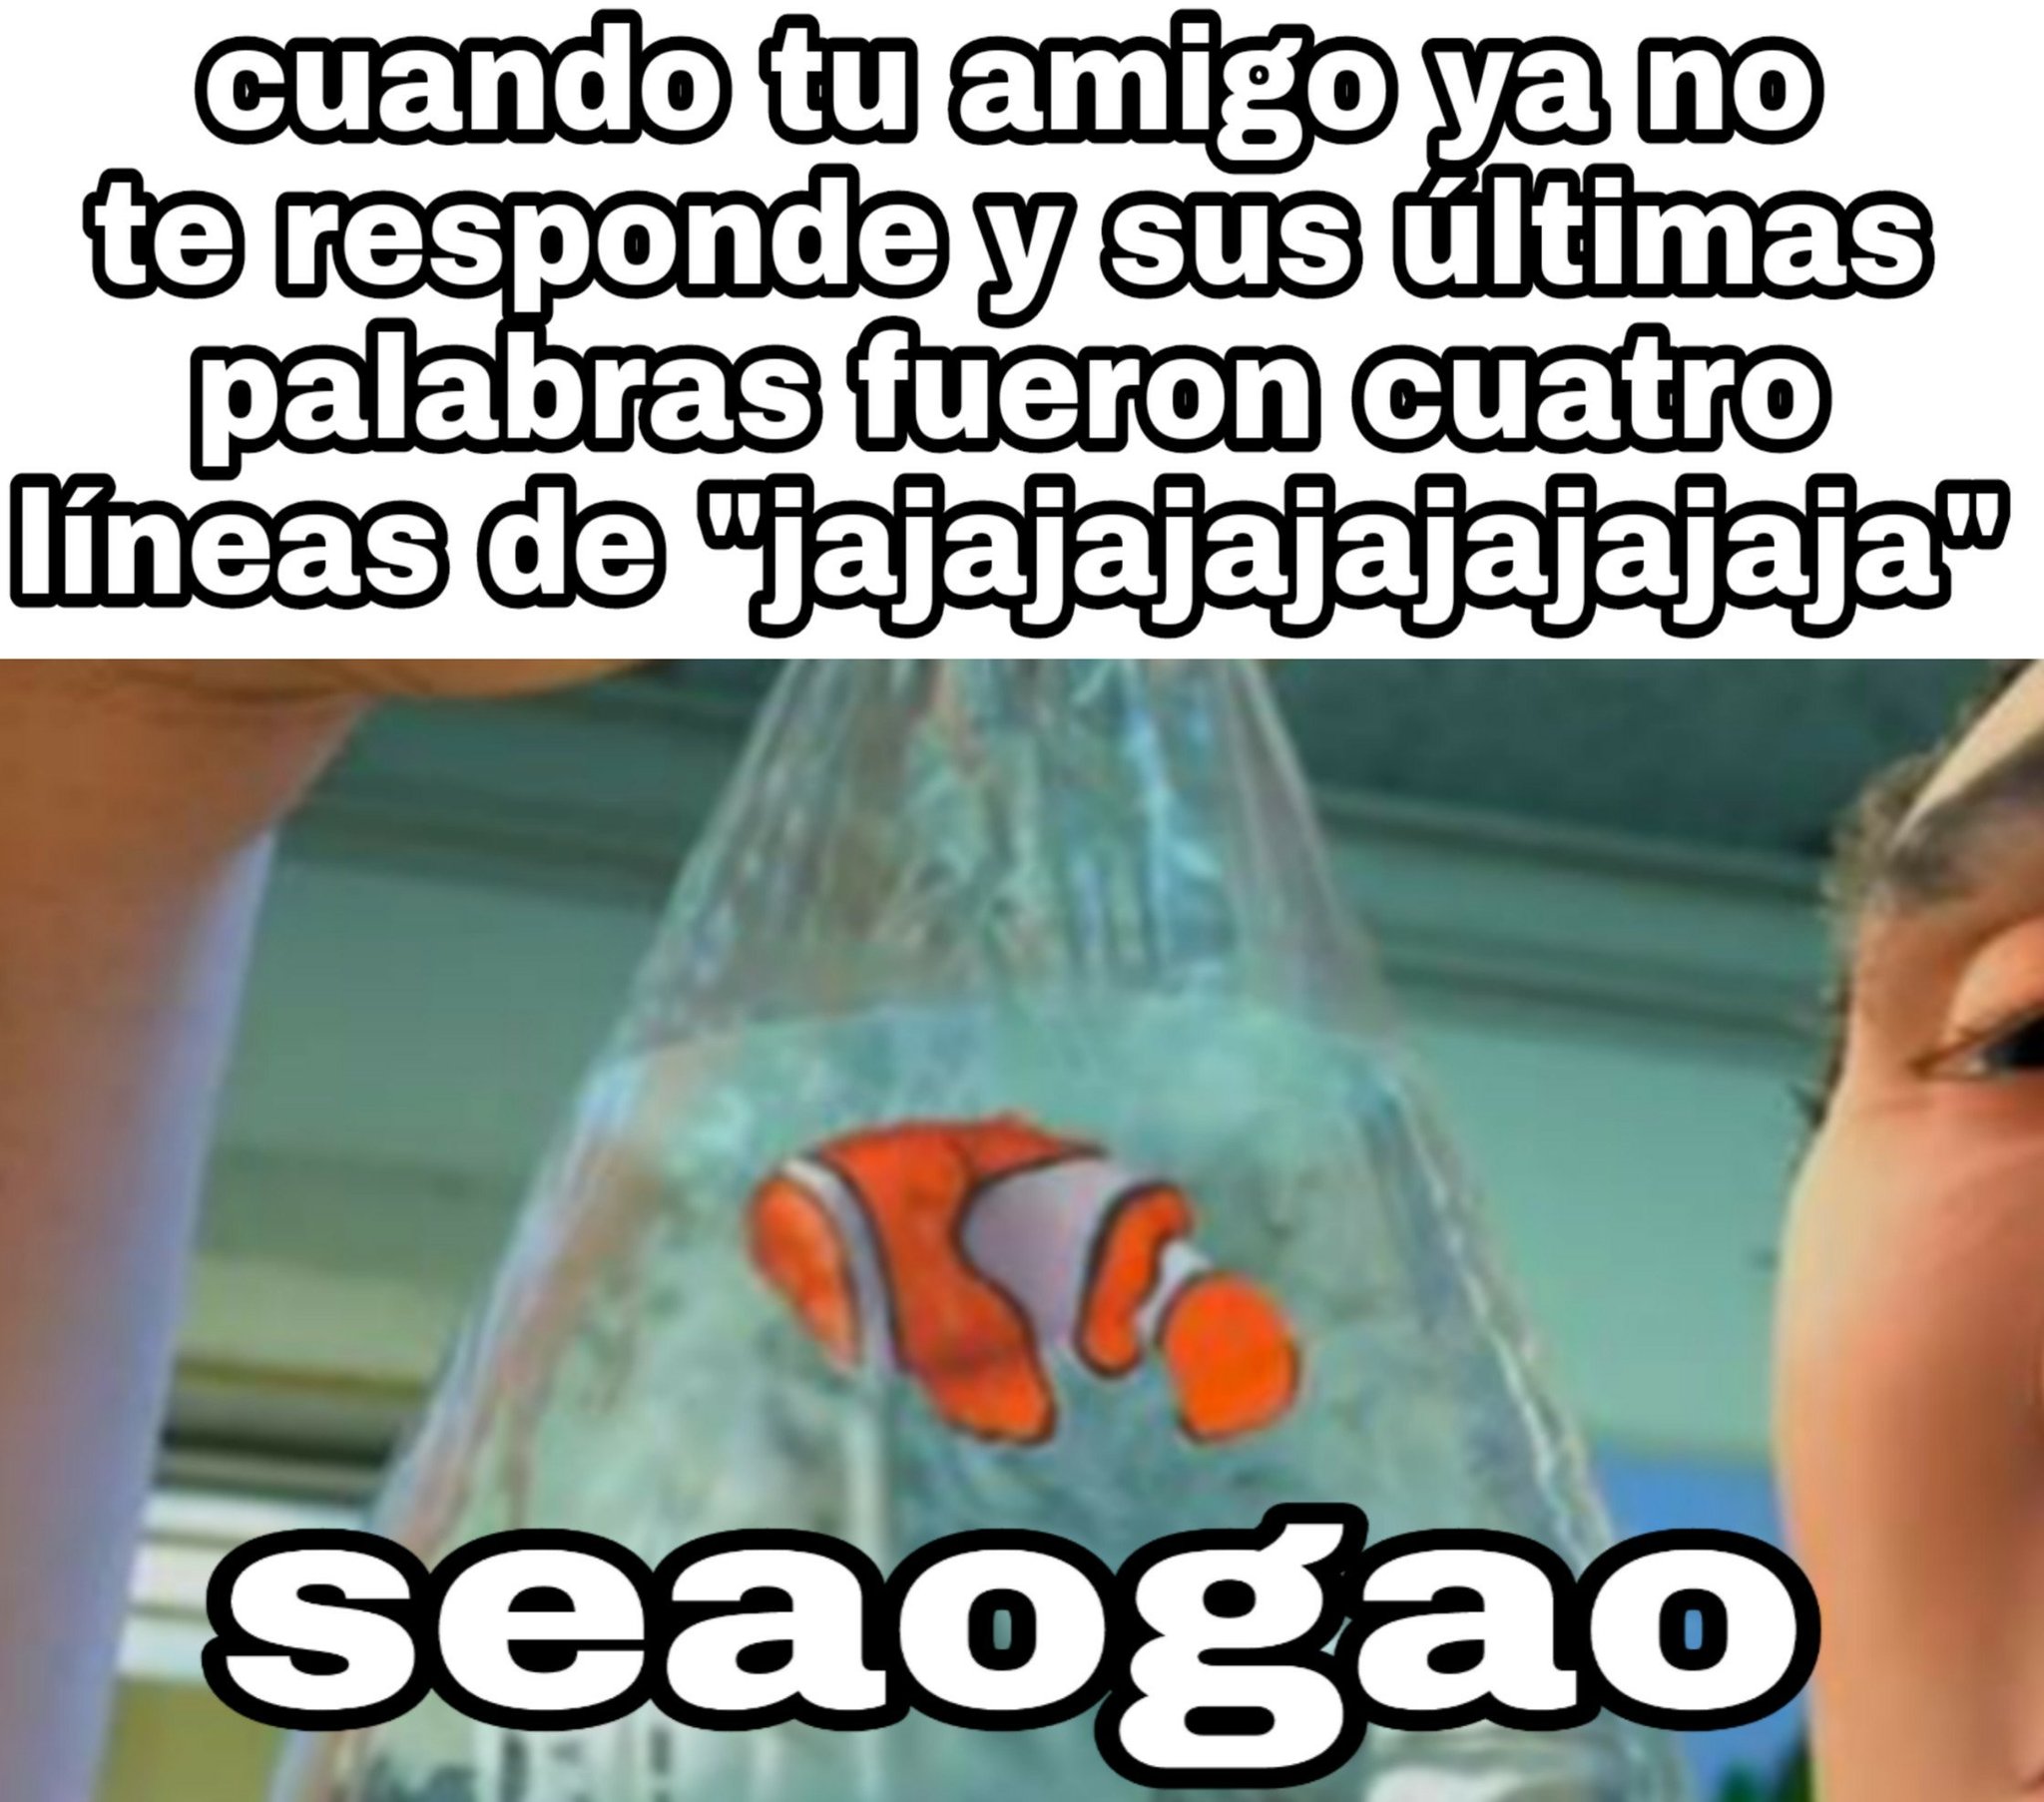 Nemo seaogao - meme